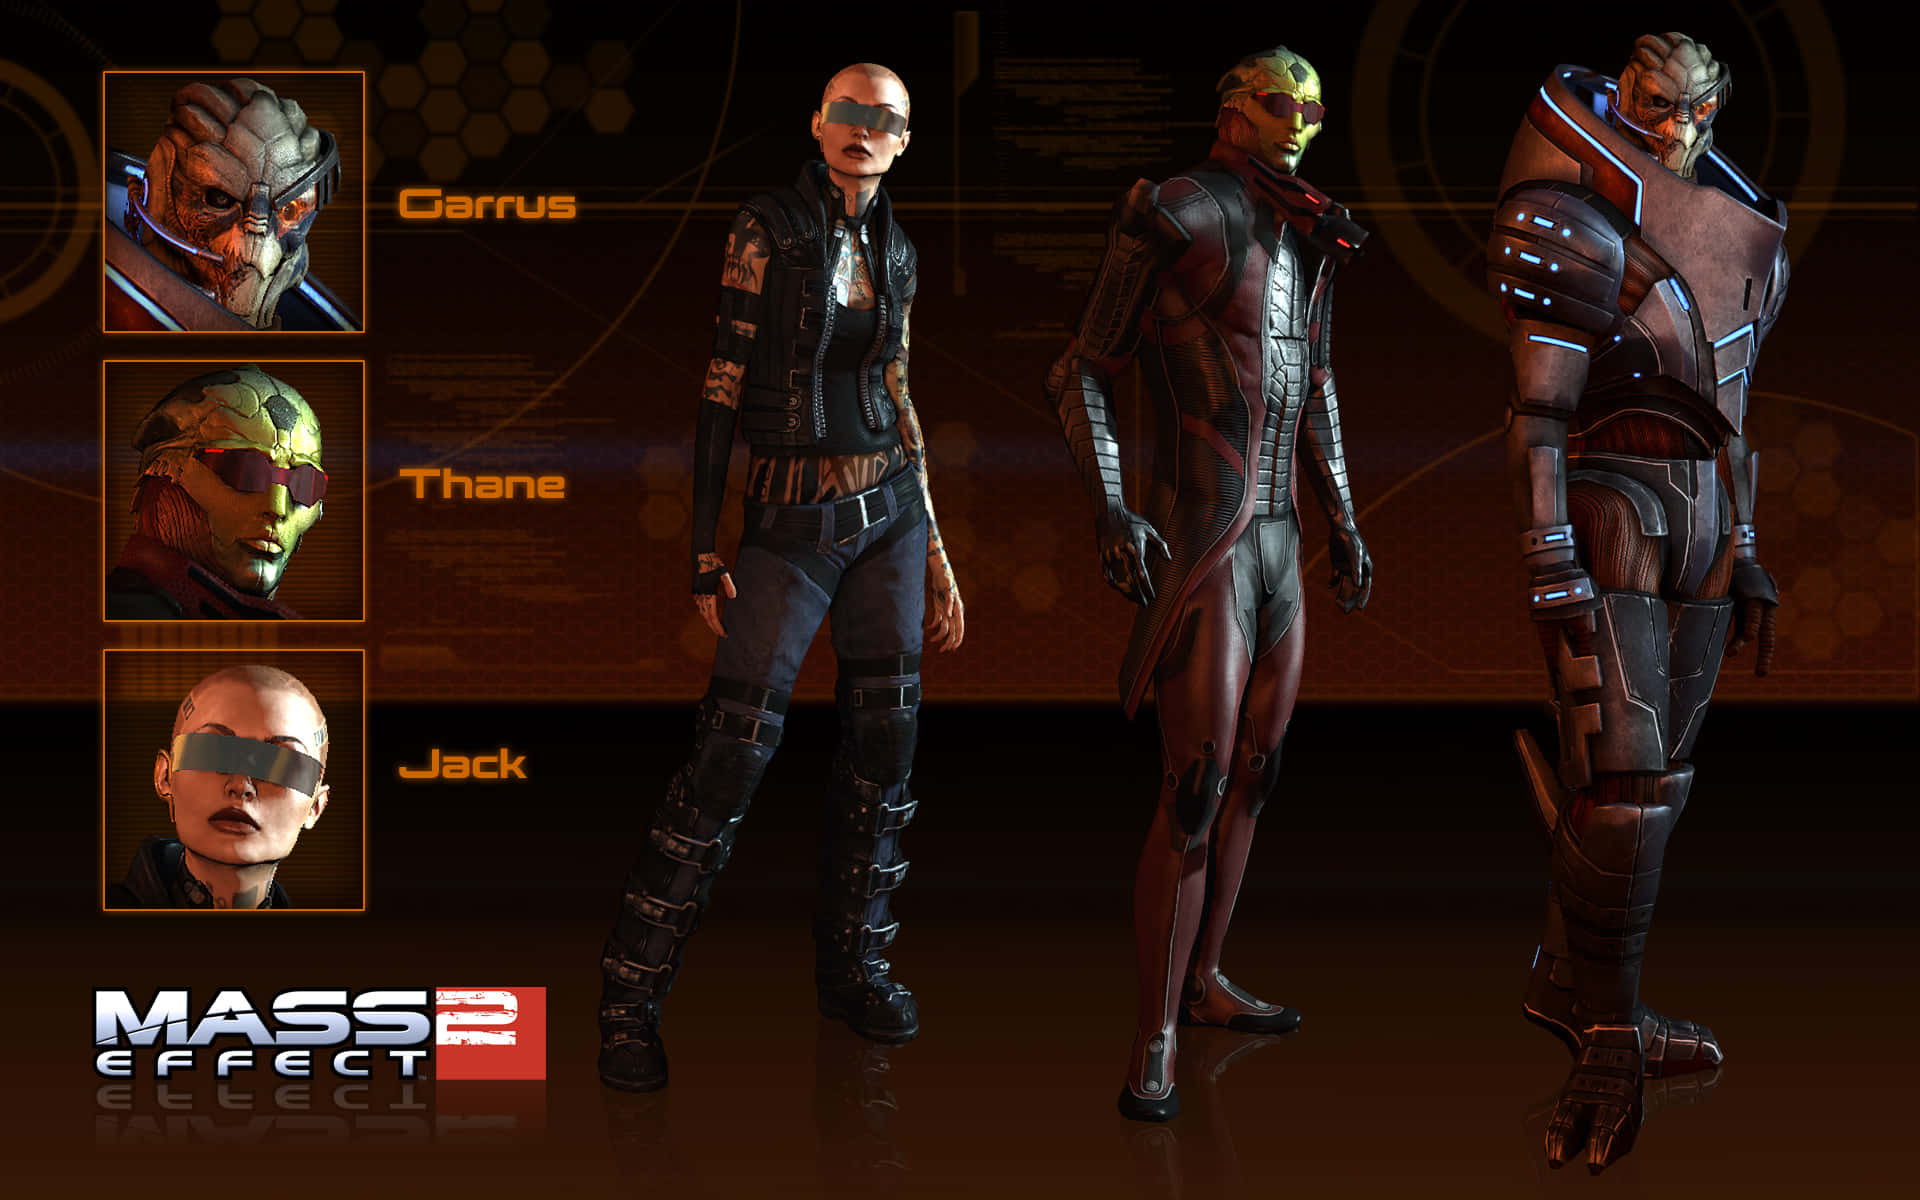 Commander Shepard and Crew in Action in Mass Effect 2 Wallpaper